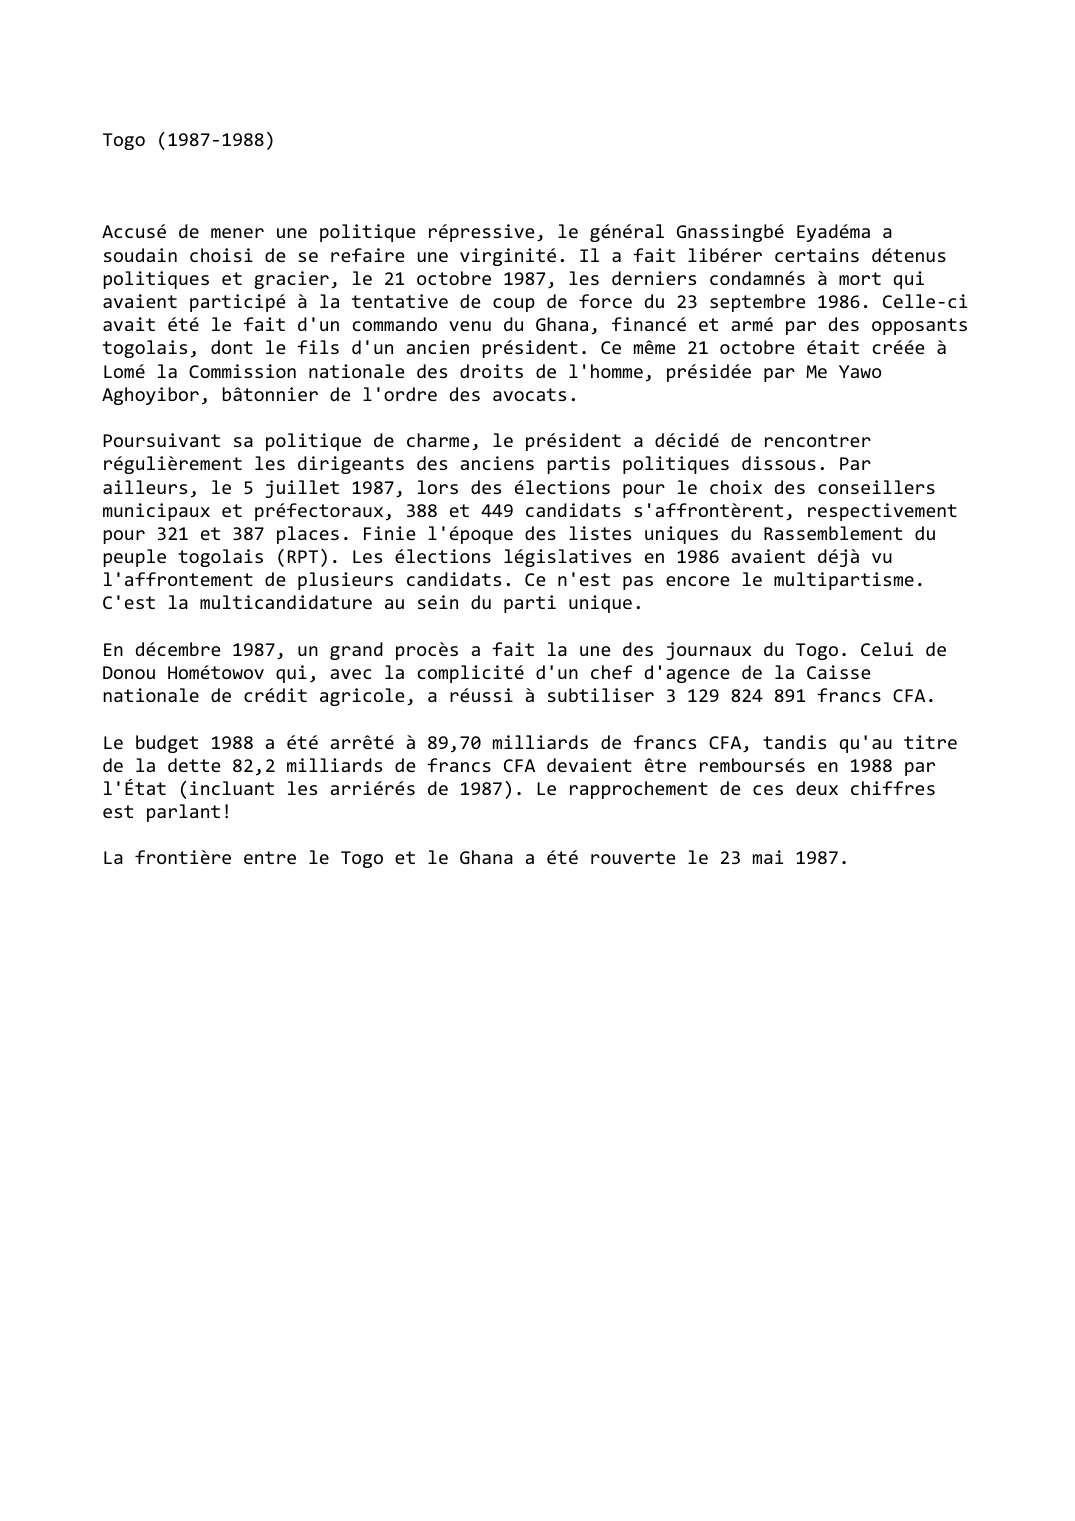 Prévisualisation du document Togo (1987-1988)